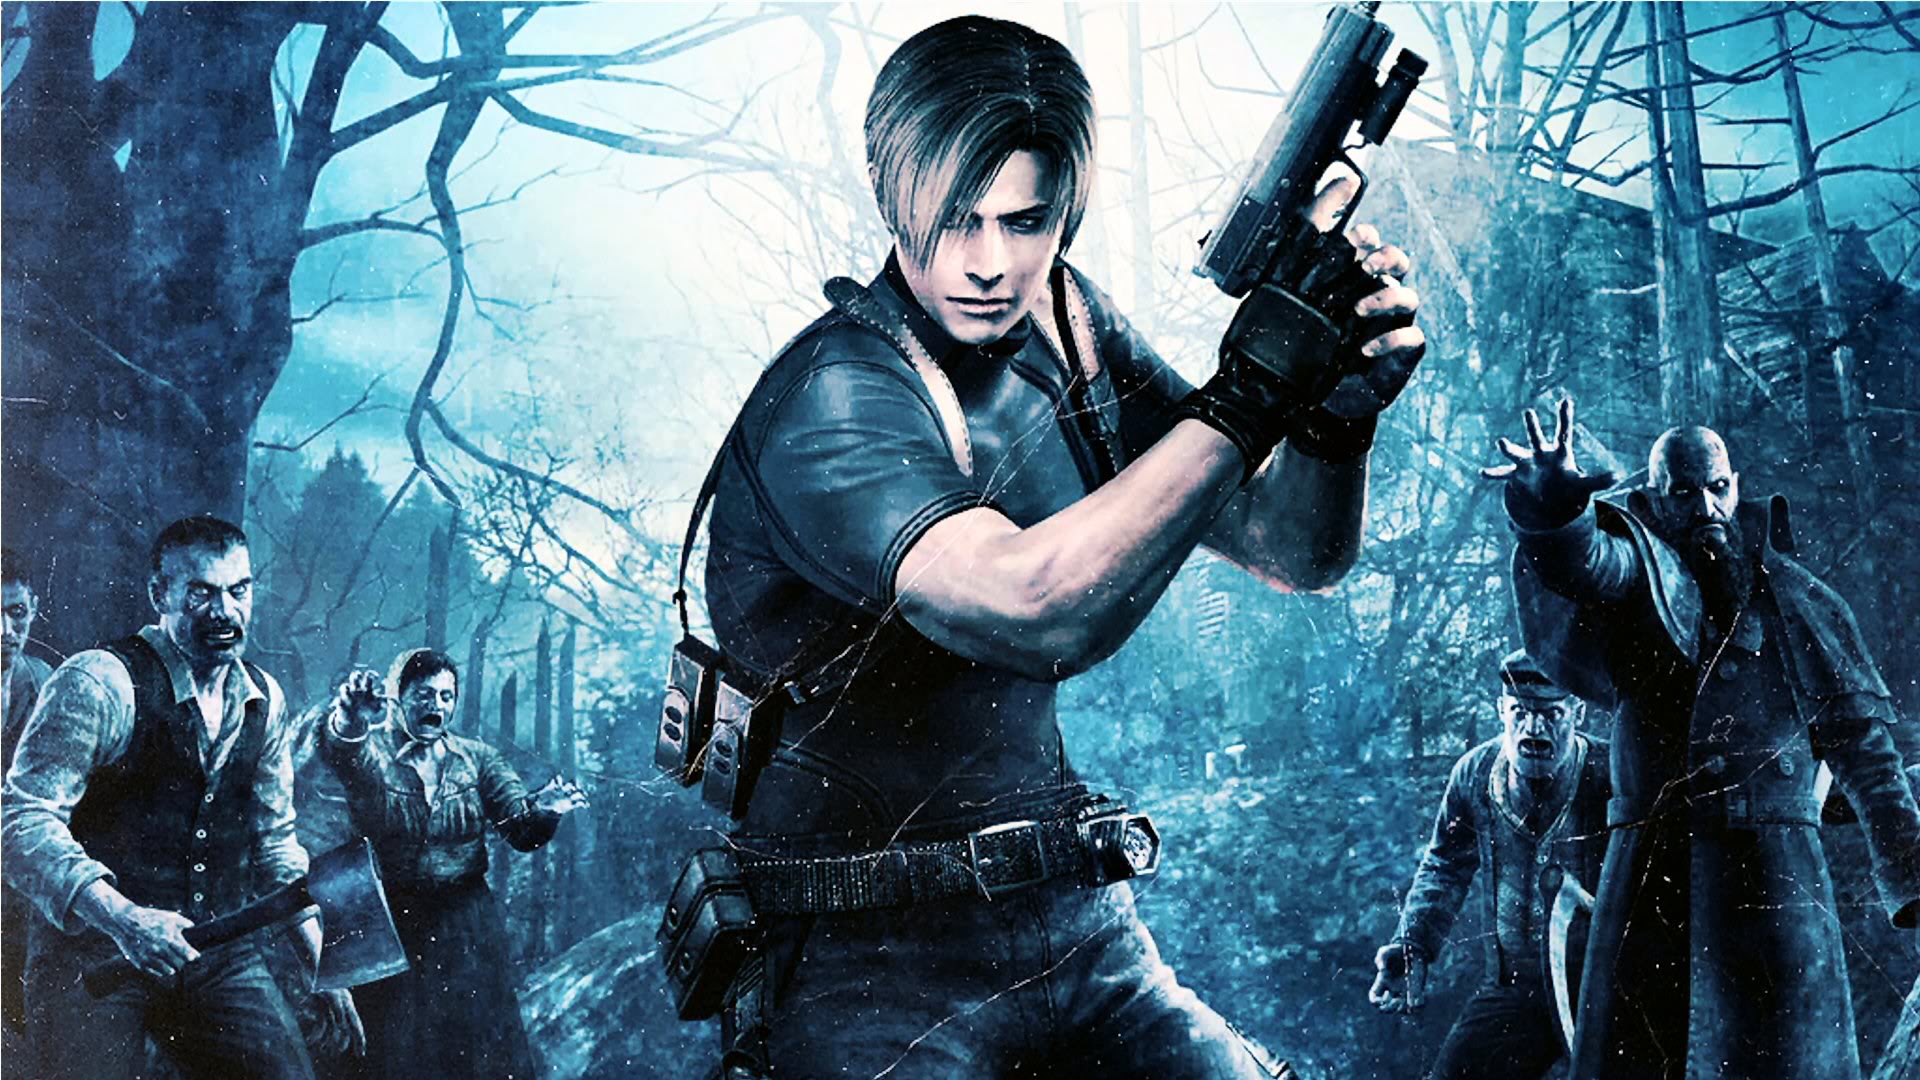 Ashley Graham Resident Evil 4 Remake 4K Wallpaper iPhone HD Phone #4151j